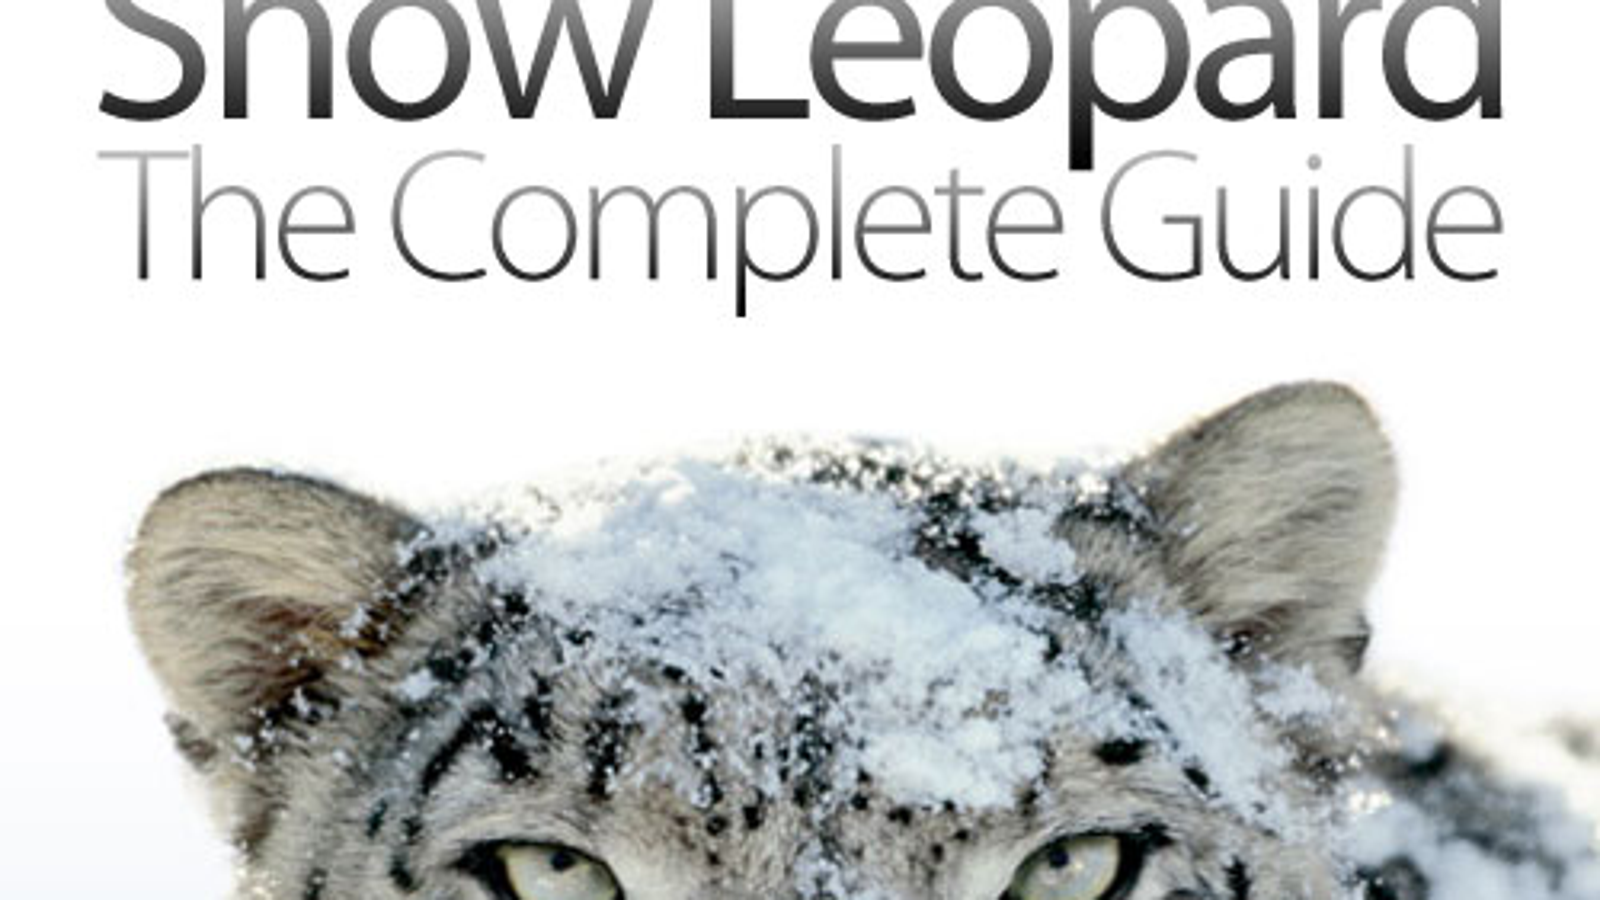 mac os x snow leopard 10.6 .iso